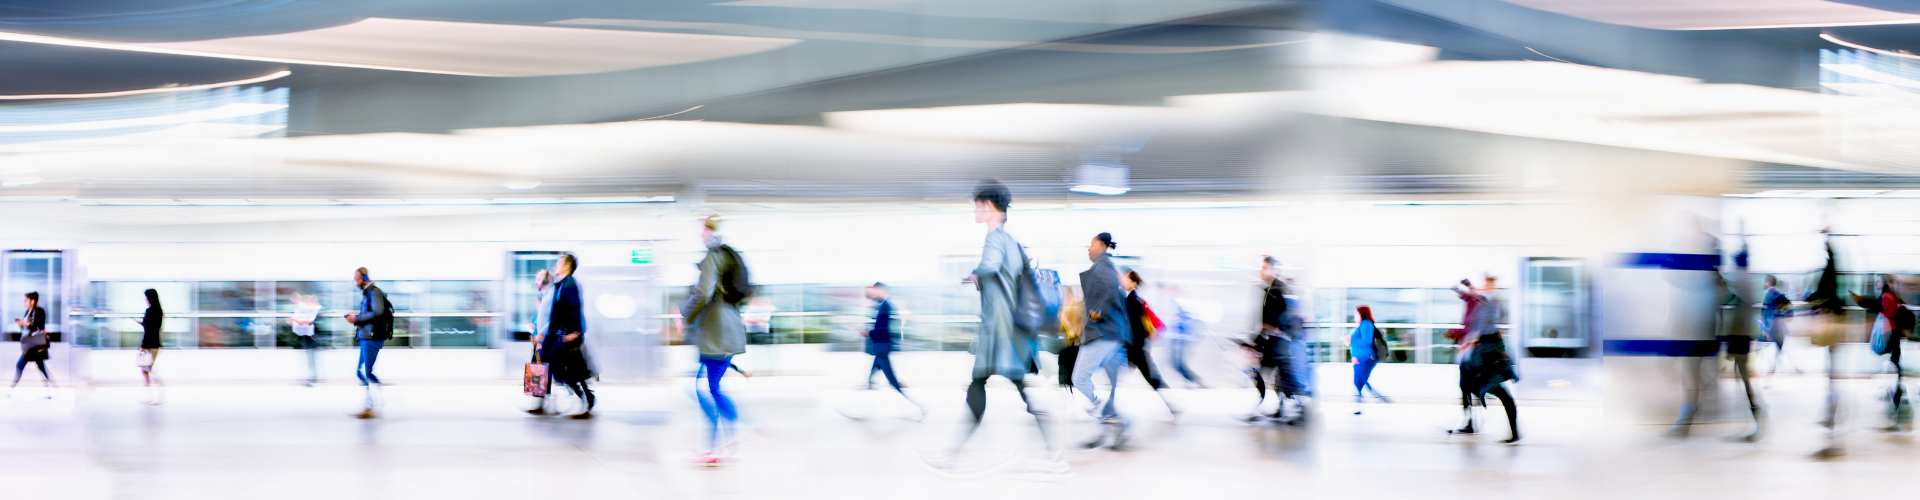 People walking at fast speed through a terminal